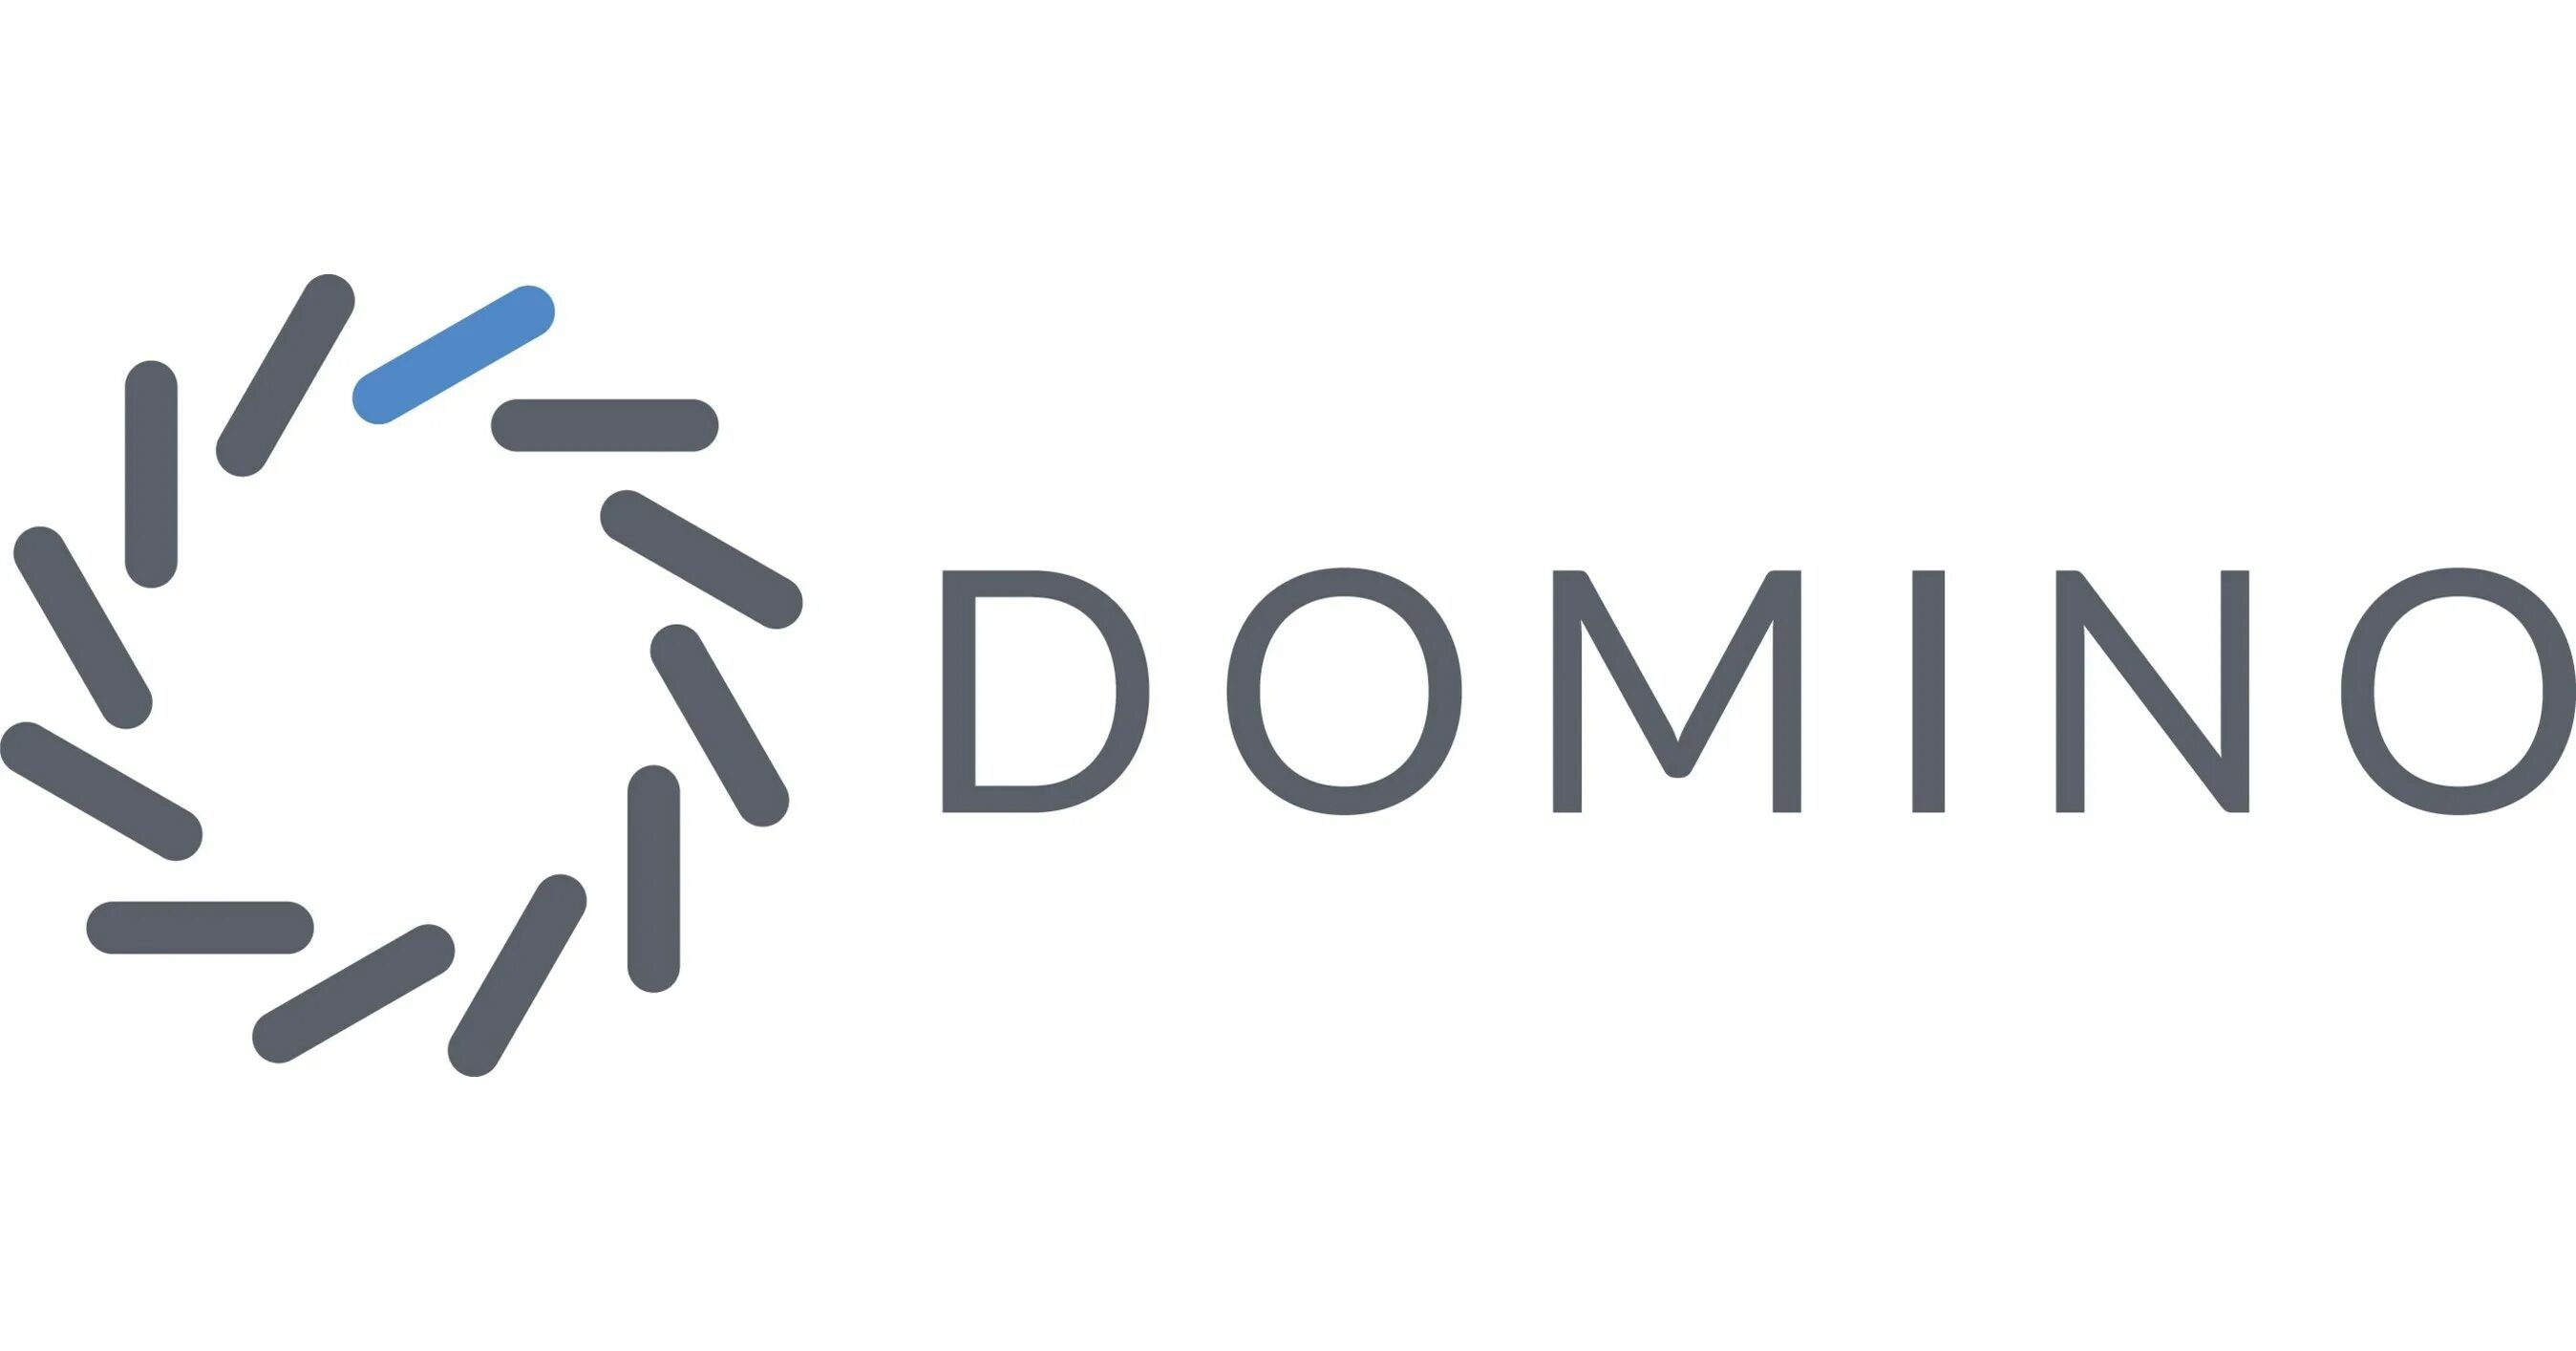 Ооо домино. Бренд Domino. Domino лого. Домино с логотипом бренда.